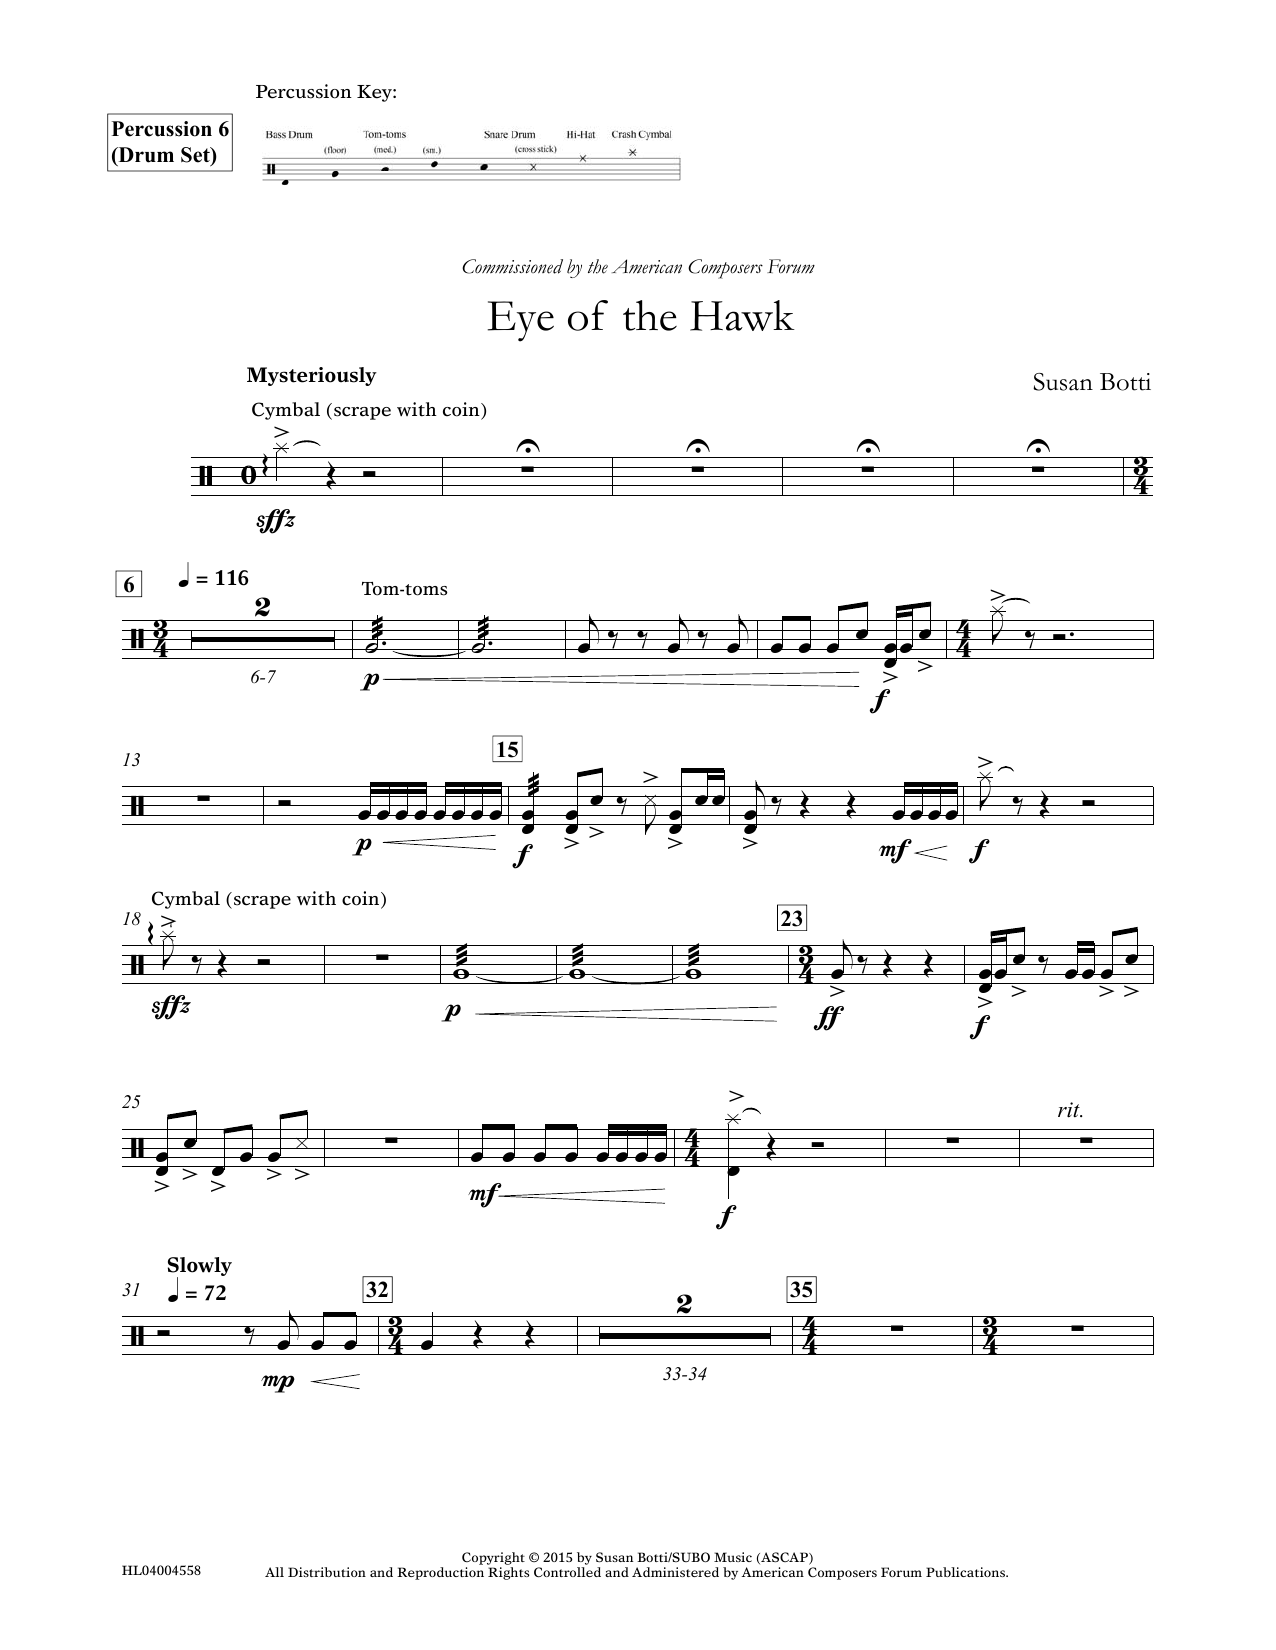 Download Susan Botti Eye of the Hawk - Percussion 6 Sheet Music